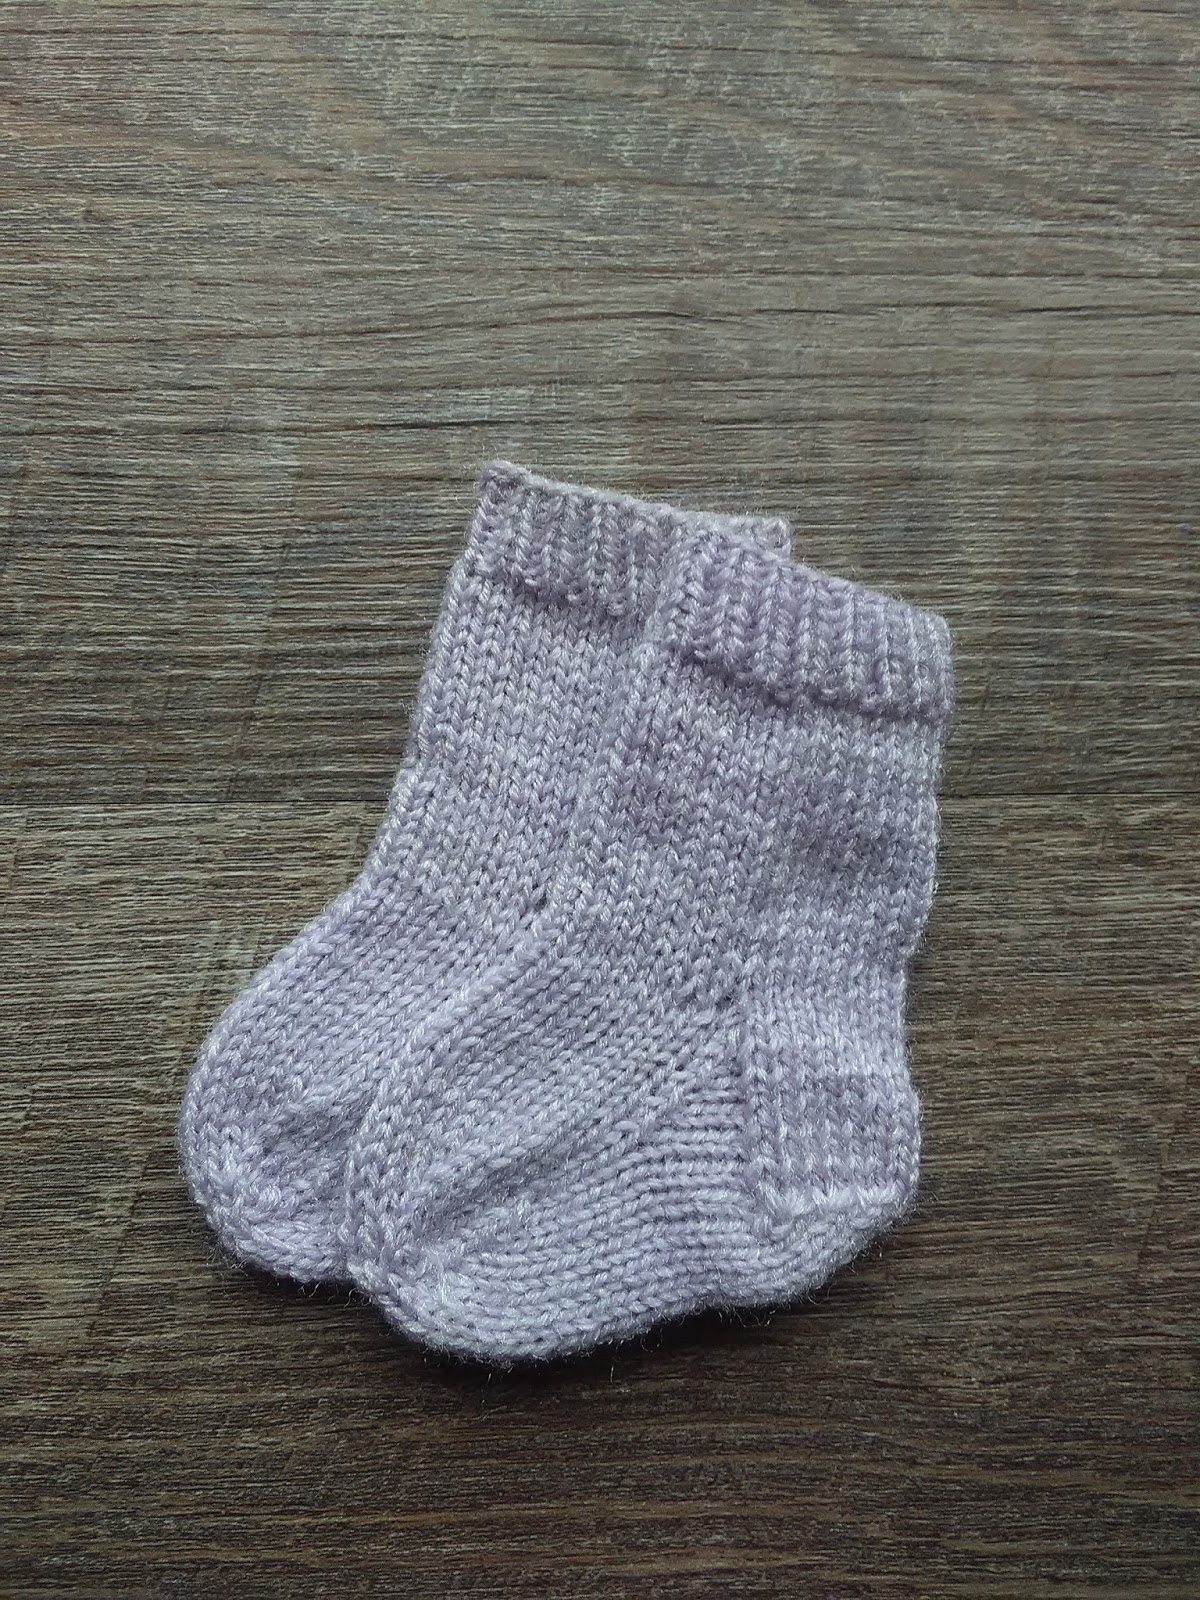 Baby Socks Knitting Patterns The Perfect Ba Sock Pattern Knits In Denine